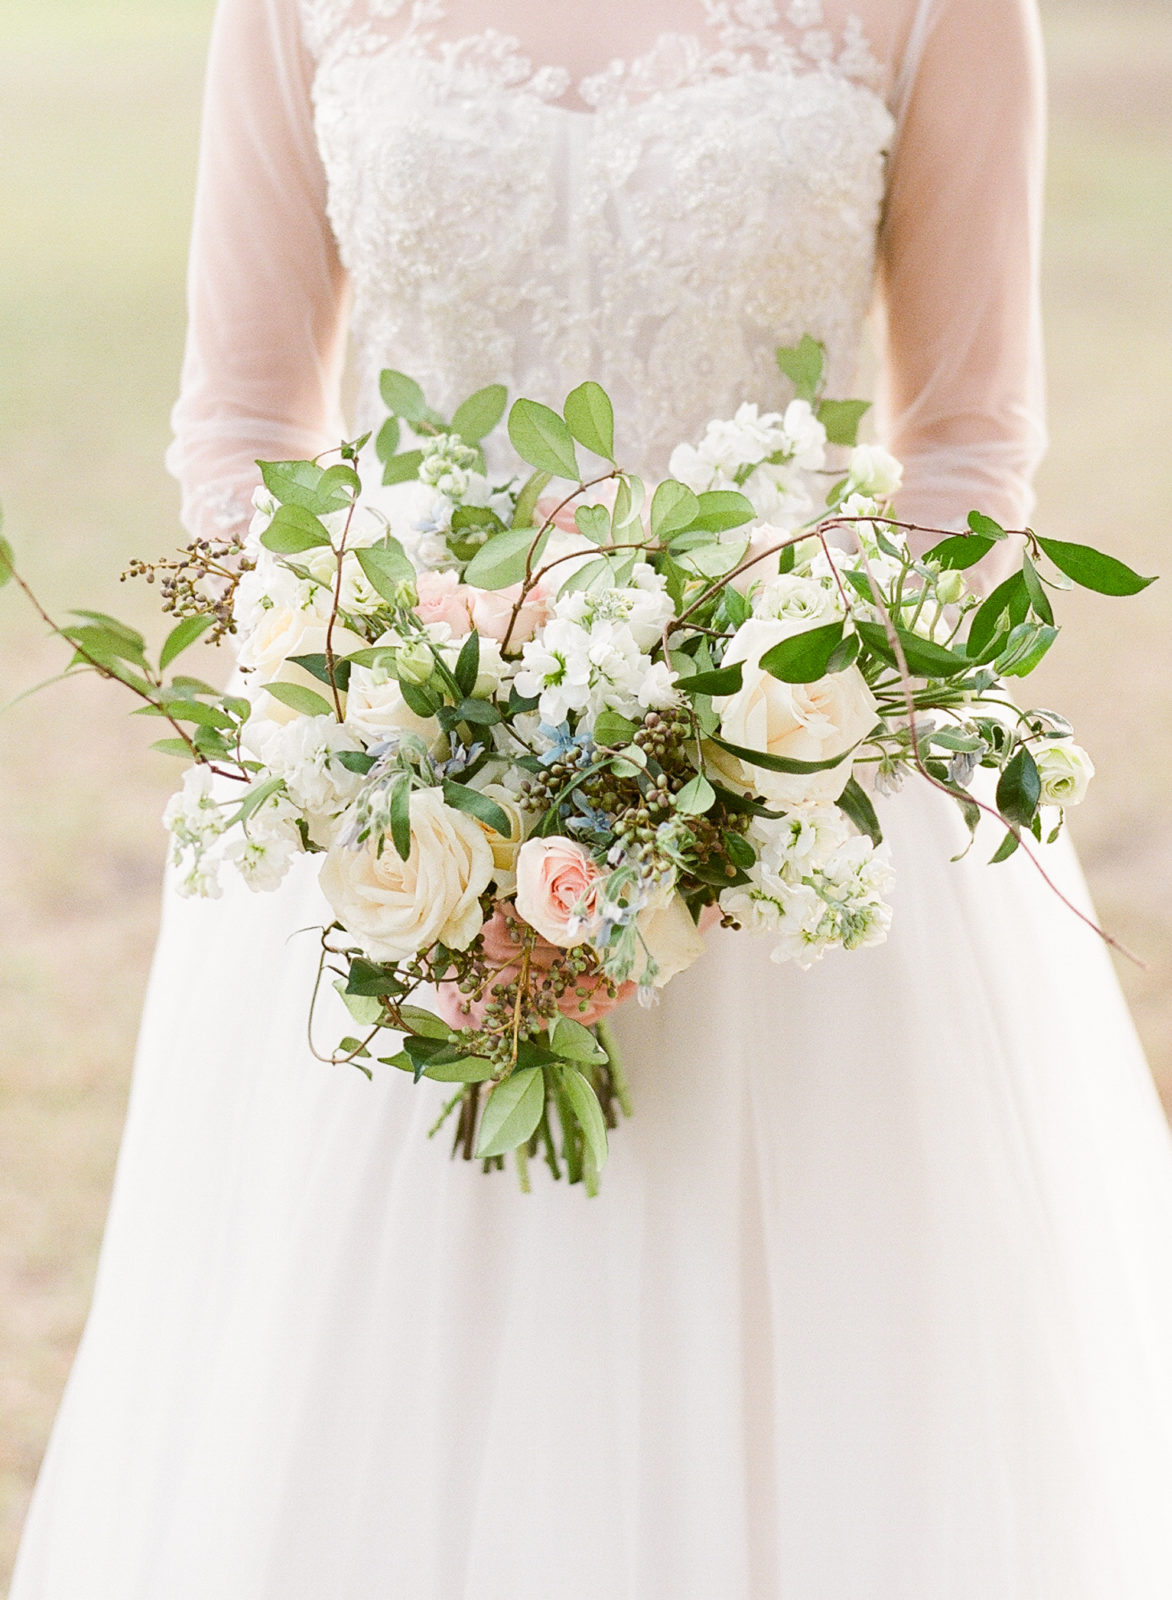 Best Wedding Bouquets of 2018 | Fine Art Wedding Photography | Film Wedding Photography | Molly Carr Photography | Boone Hall Plantation Wedding | Garden Inspired Bridal Bouquet | Southern Wedding